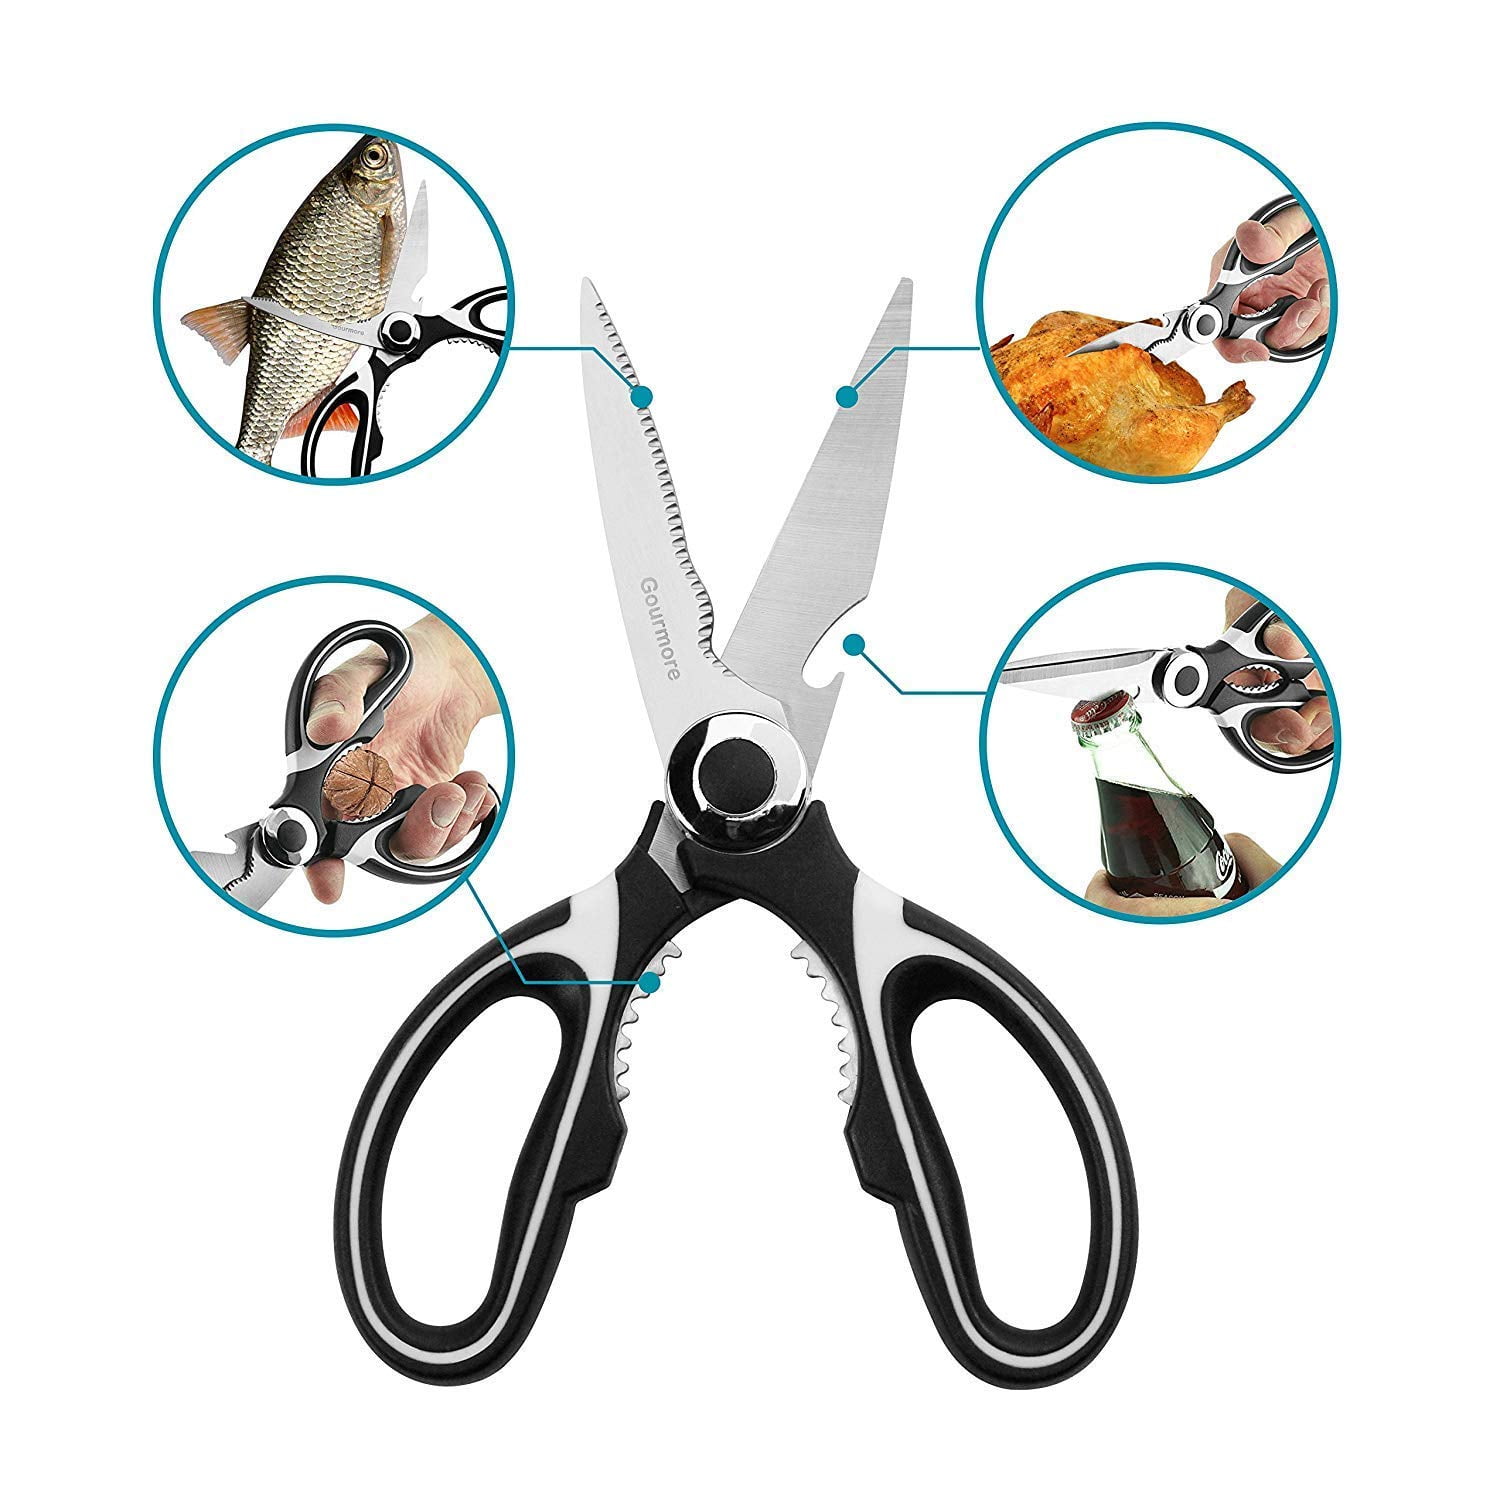 Dropship Kitchen Scissors; Cookit Kitchen Shears Heavy Duty